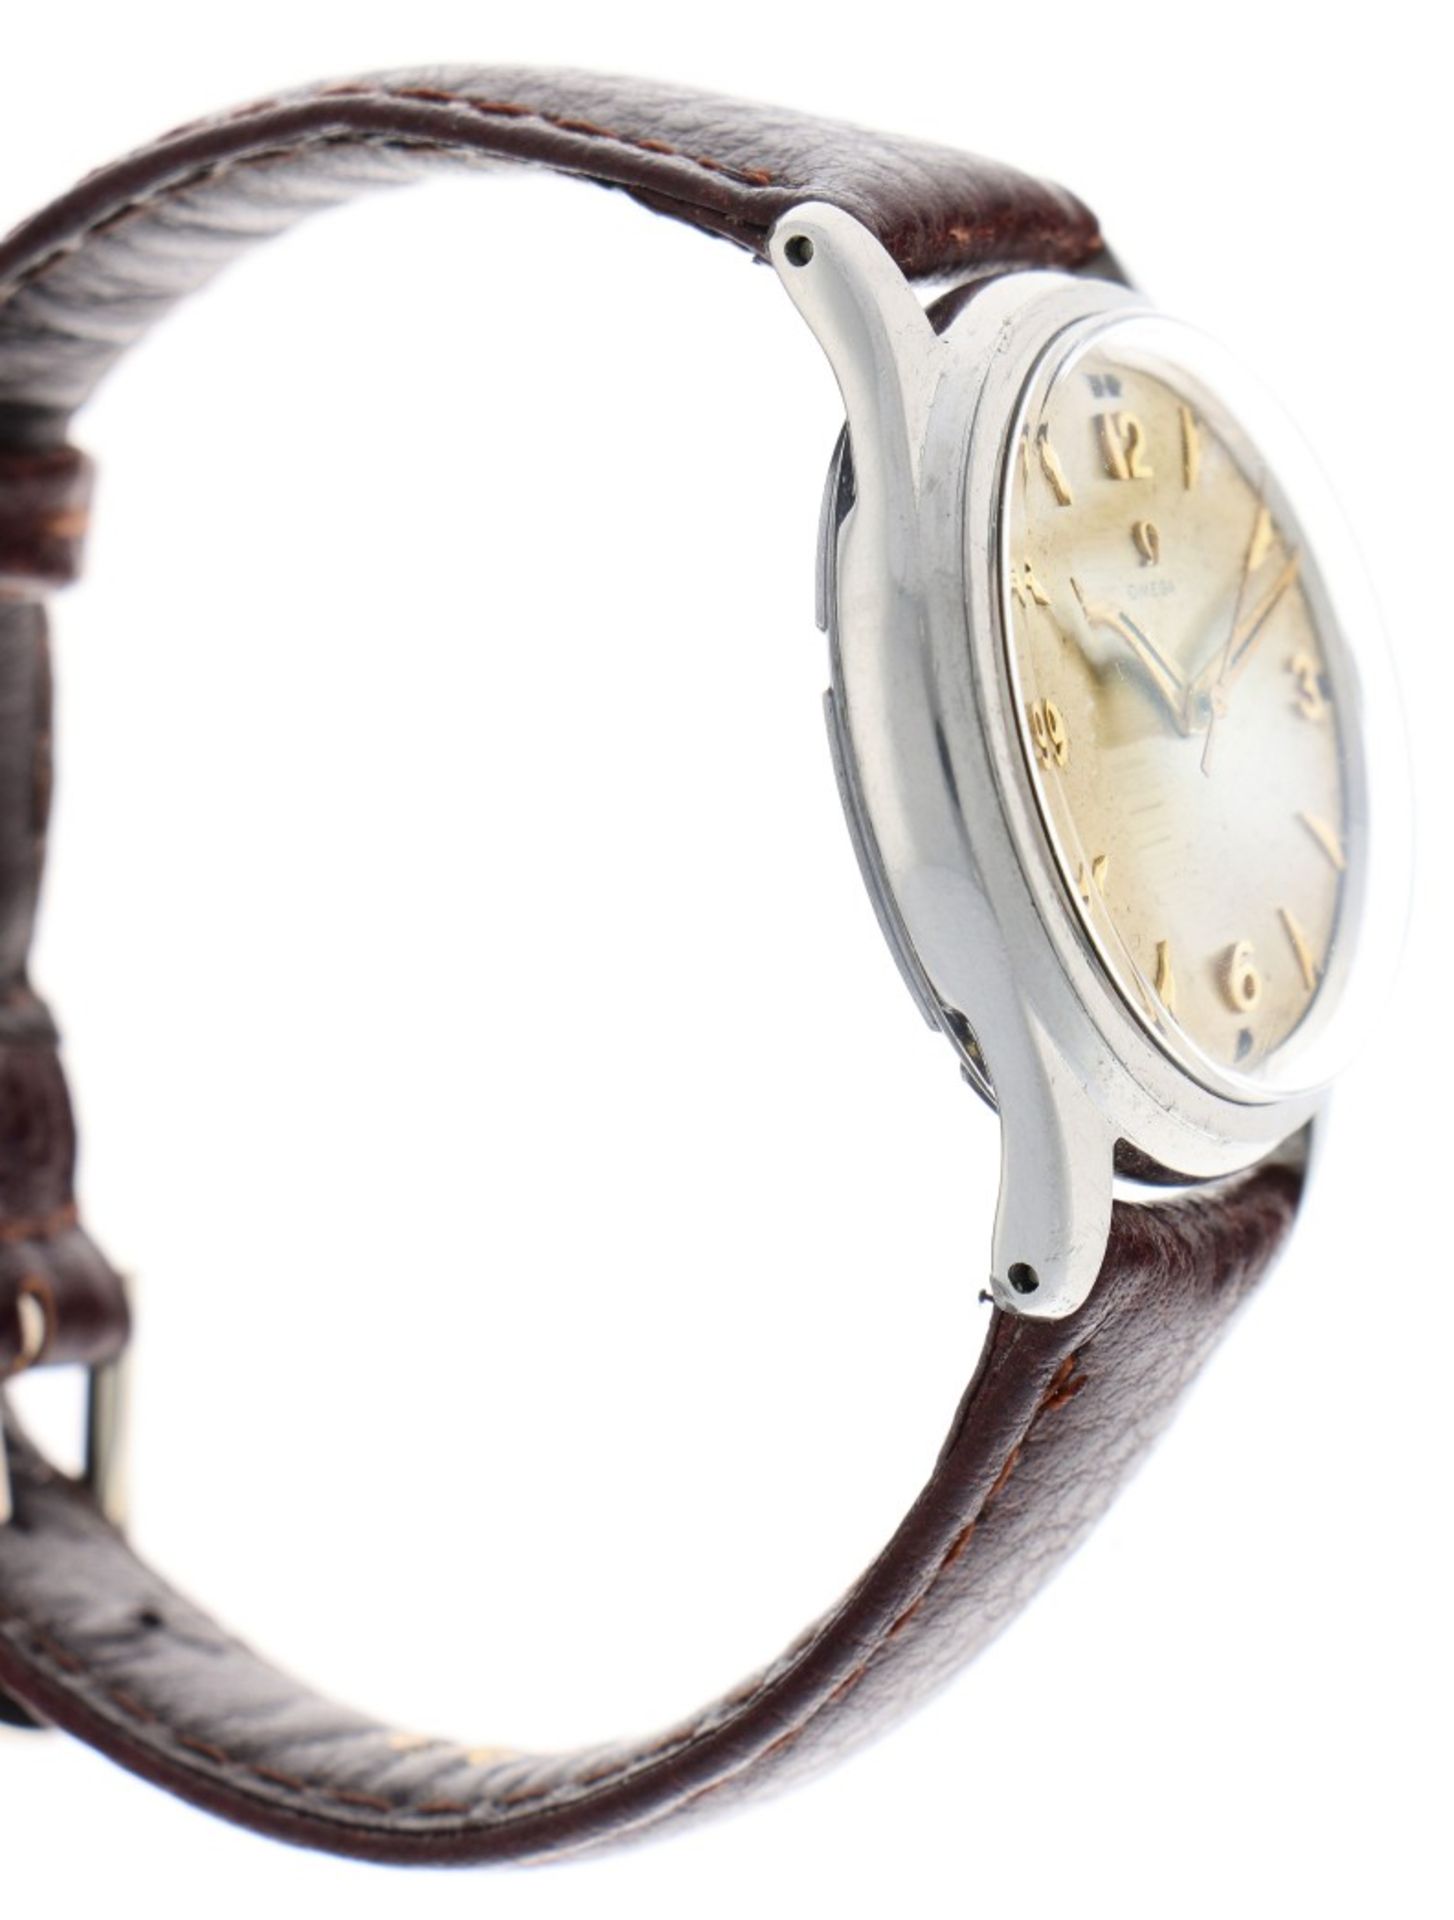 Omega 2690 SC - Men's watch - ca. 1952 - Image 4 of 7